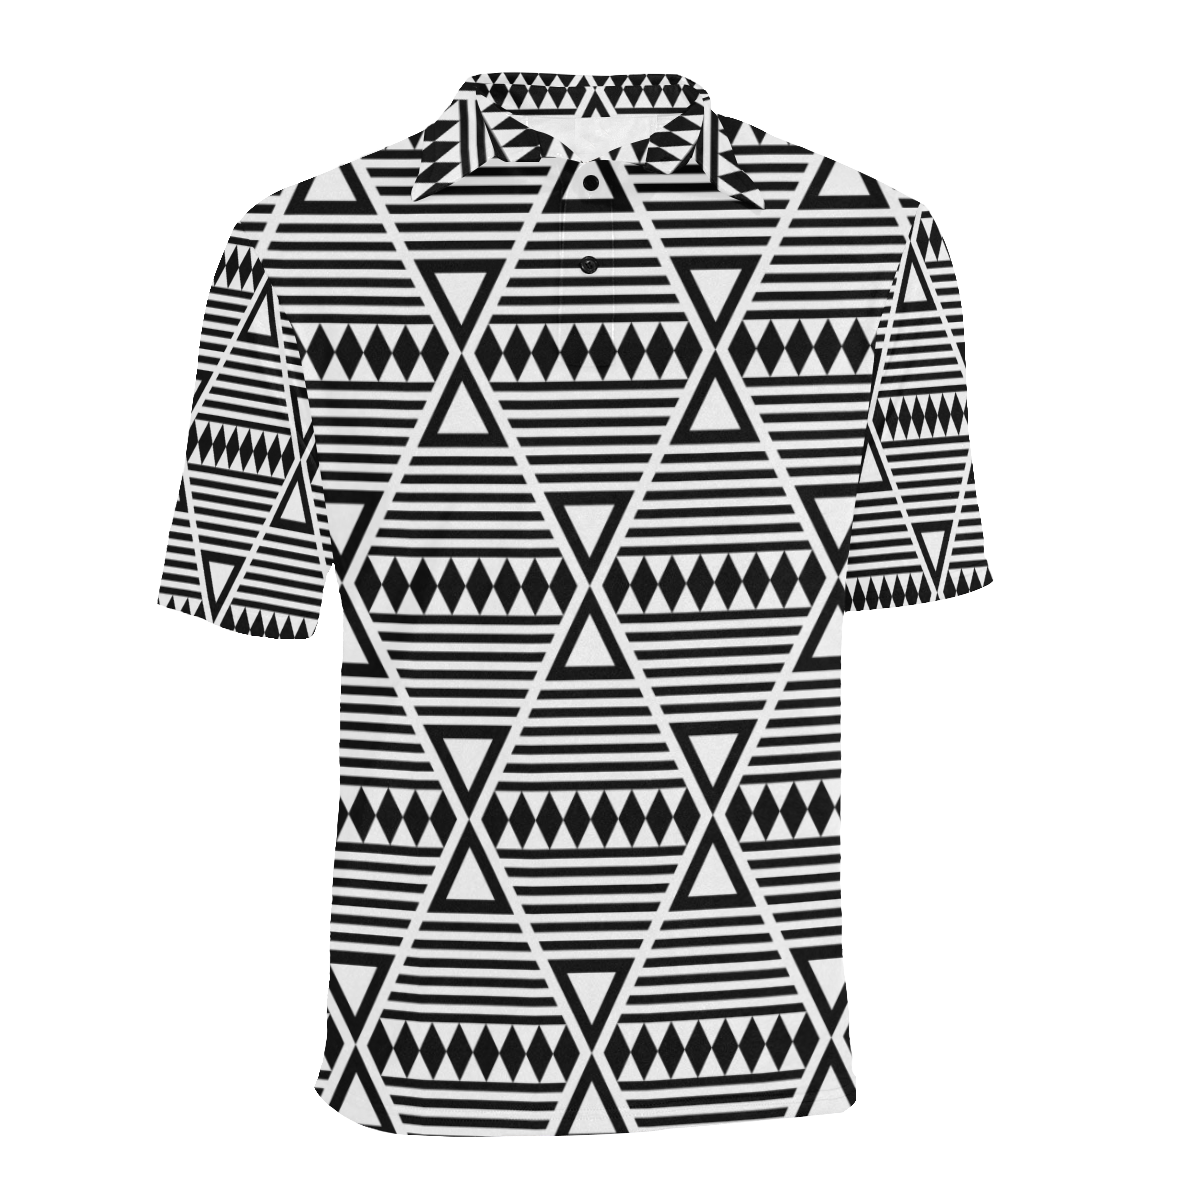 Black Aztec Tribal Men's All Over Print Polo Shirt (Model T55)